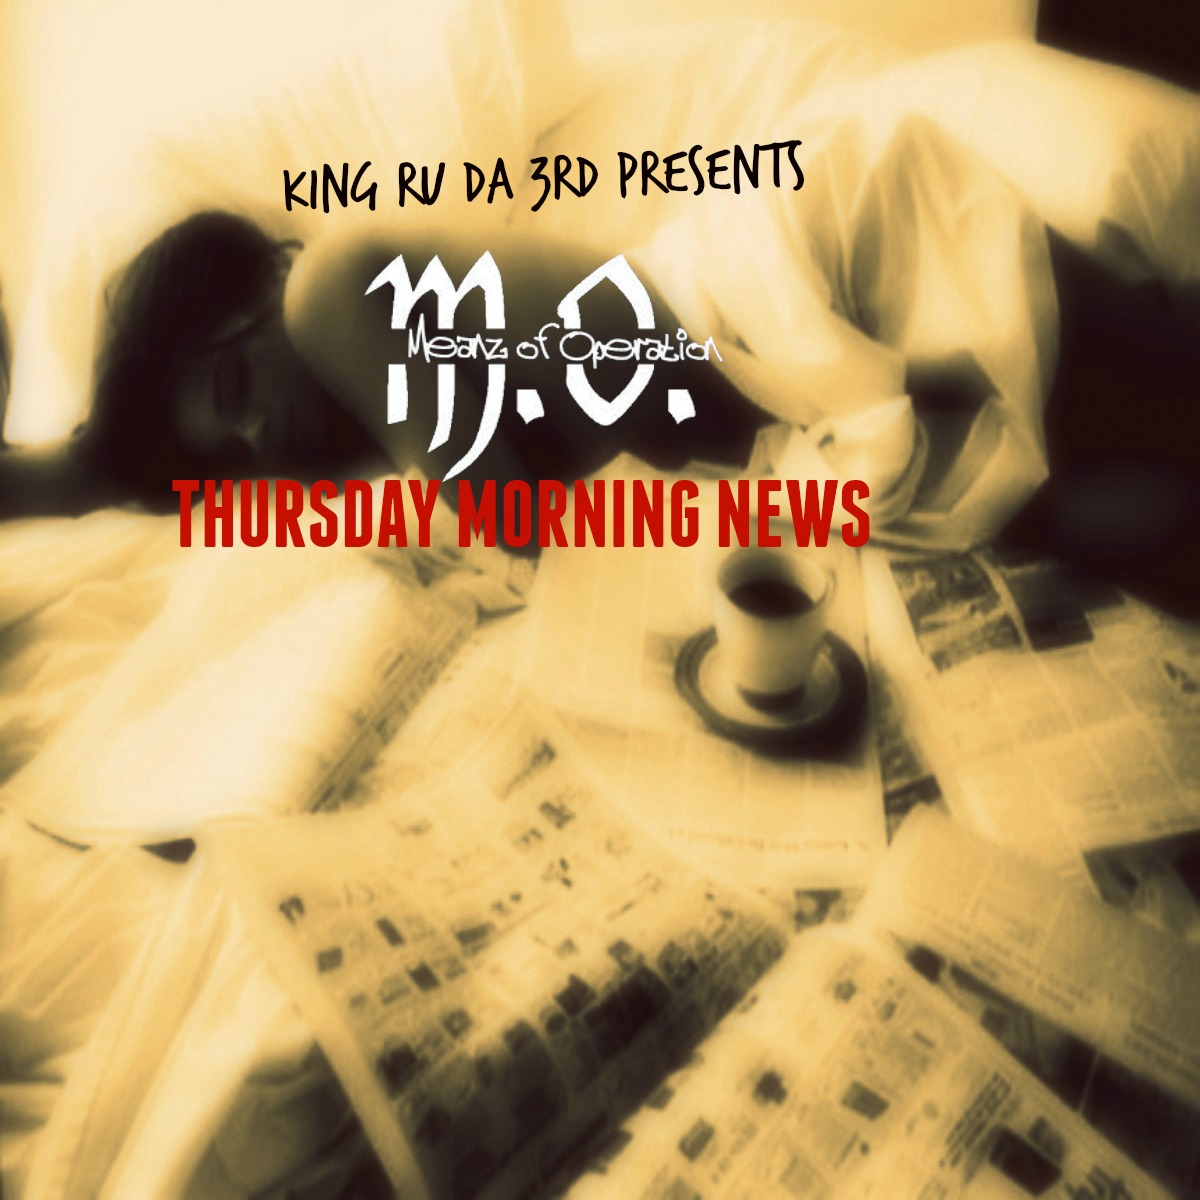 "Thursday Morning News" Produced by King Ru da 3rd